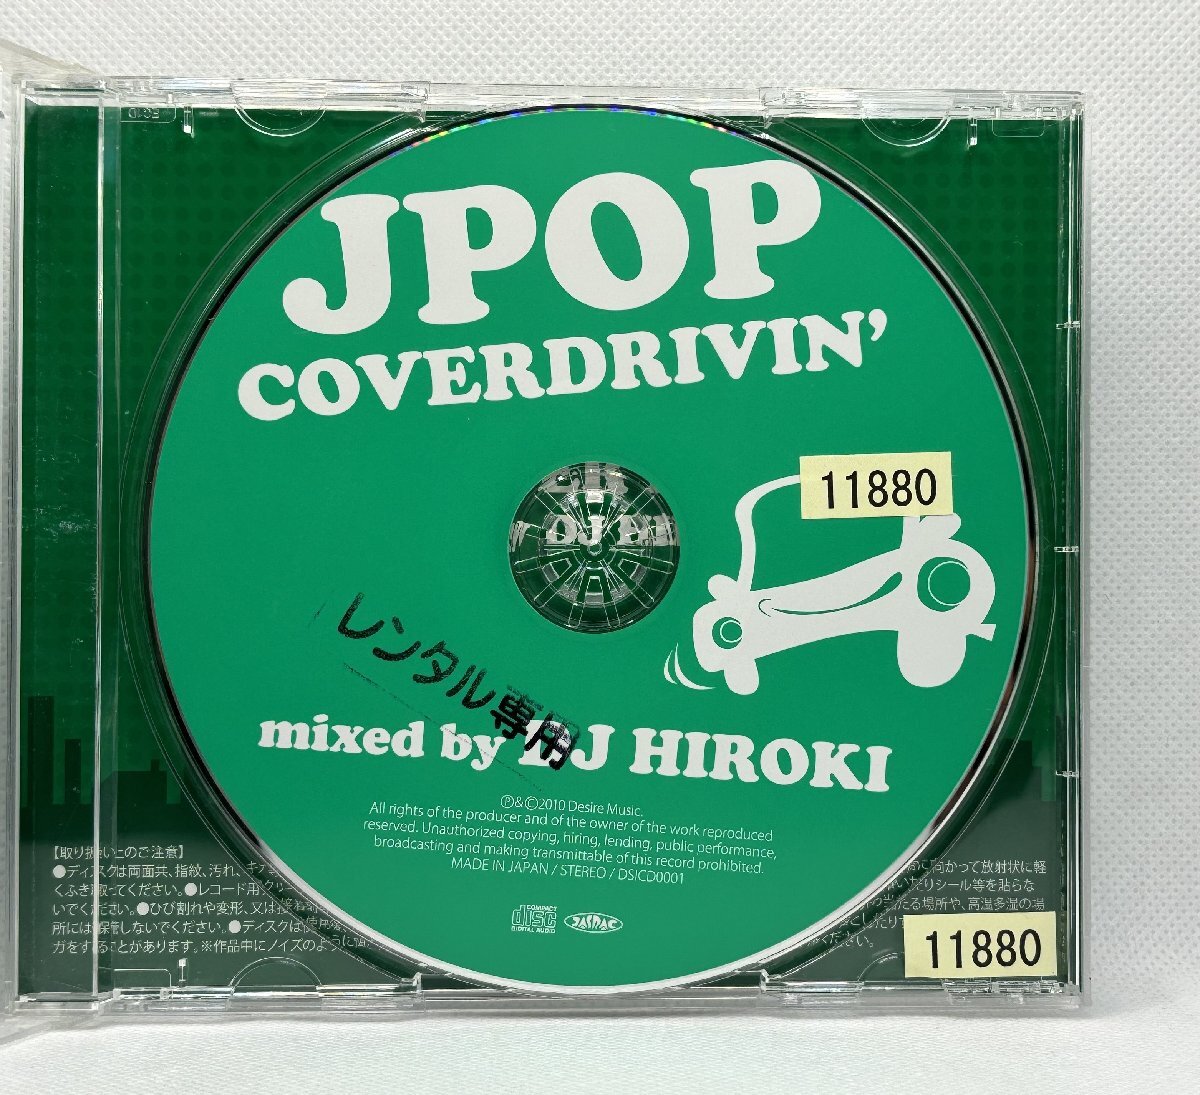 【送料無料】cd48783◆J-POP COVER DRIVIN' mixed by DJ HIROKI/中古品【CD】_画像3